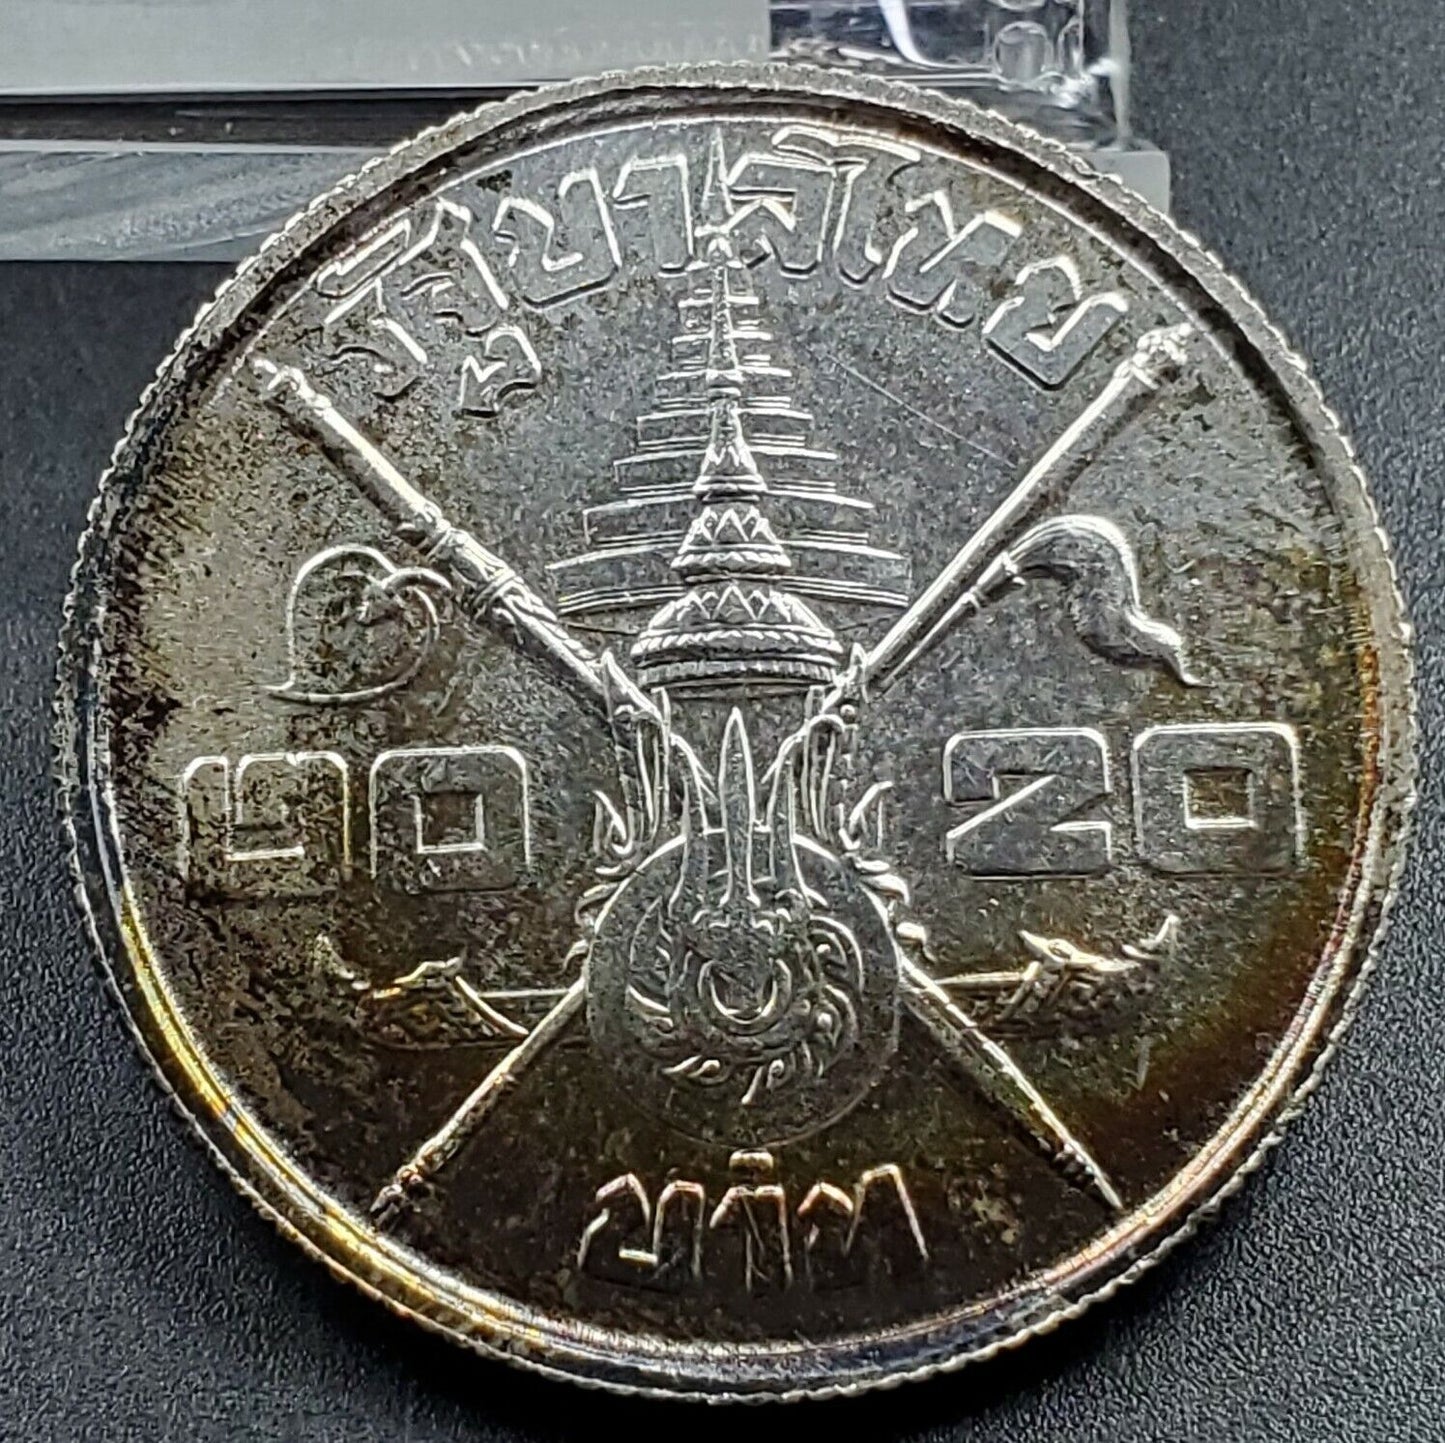 Thailand (1963) 20 Baht Silver Coin RAMA IX Birthday UNC/BU KM#86 .4726 Oz ASW